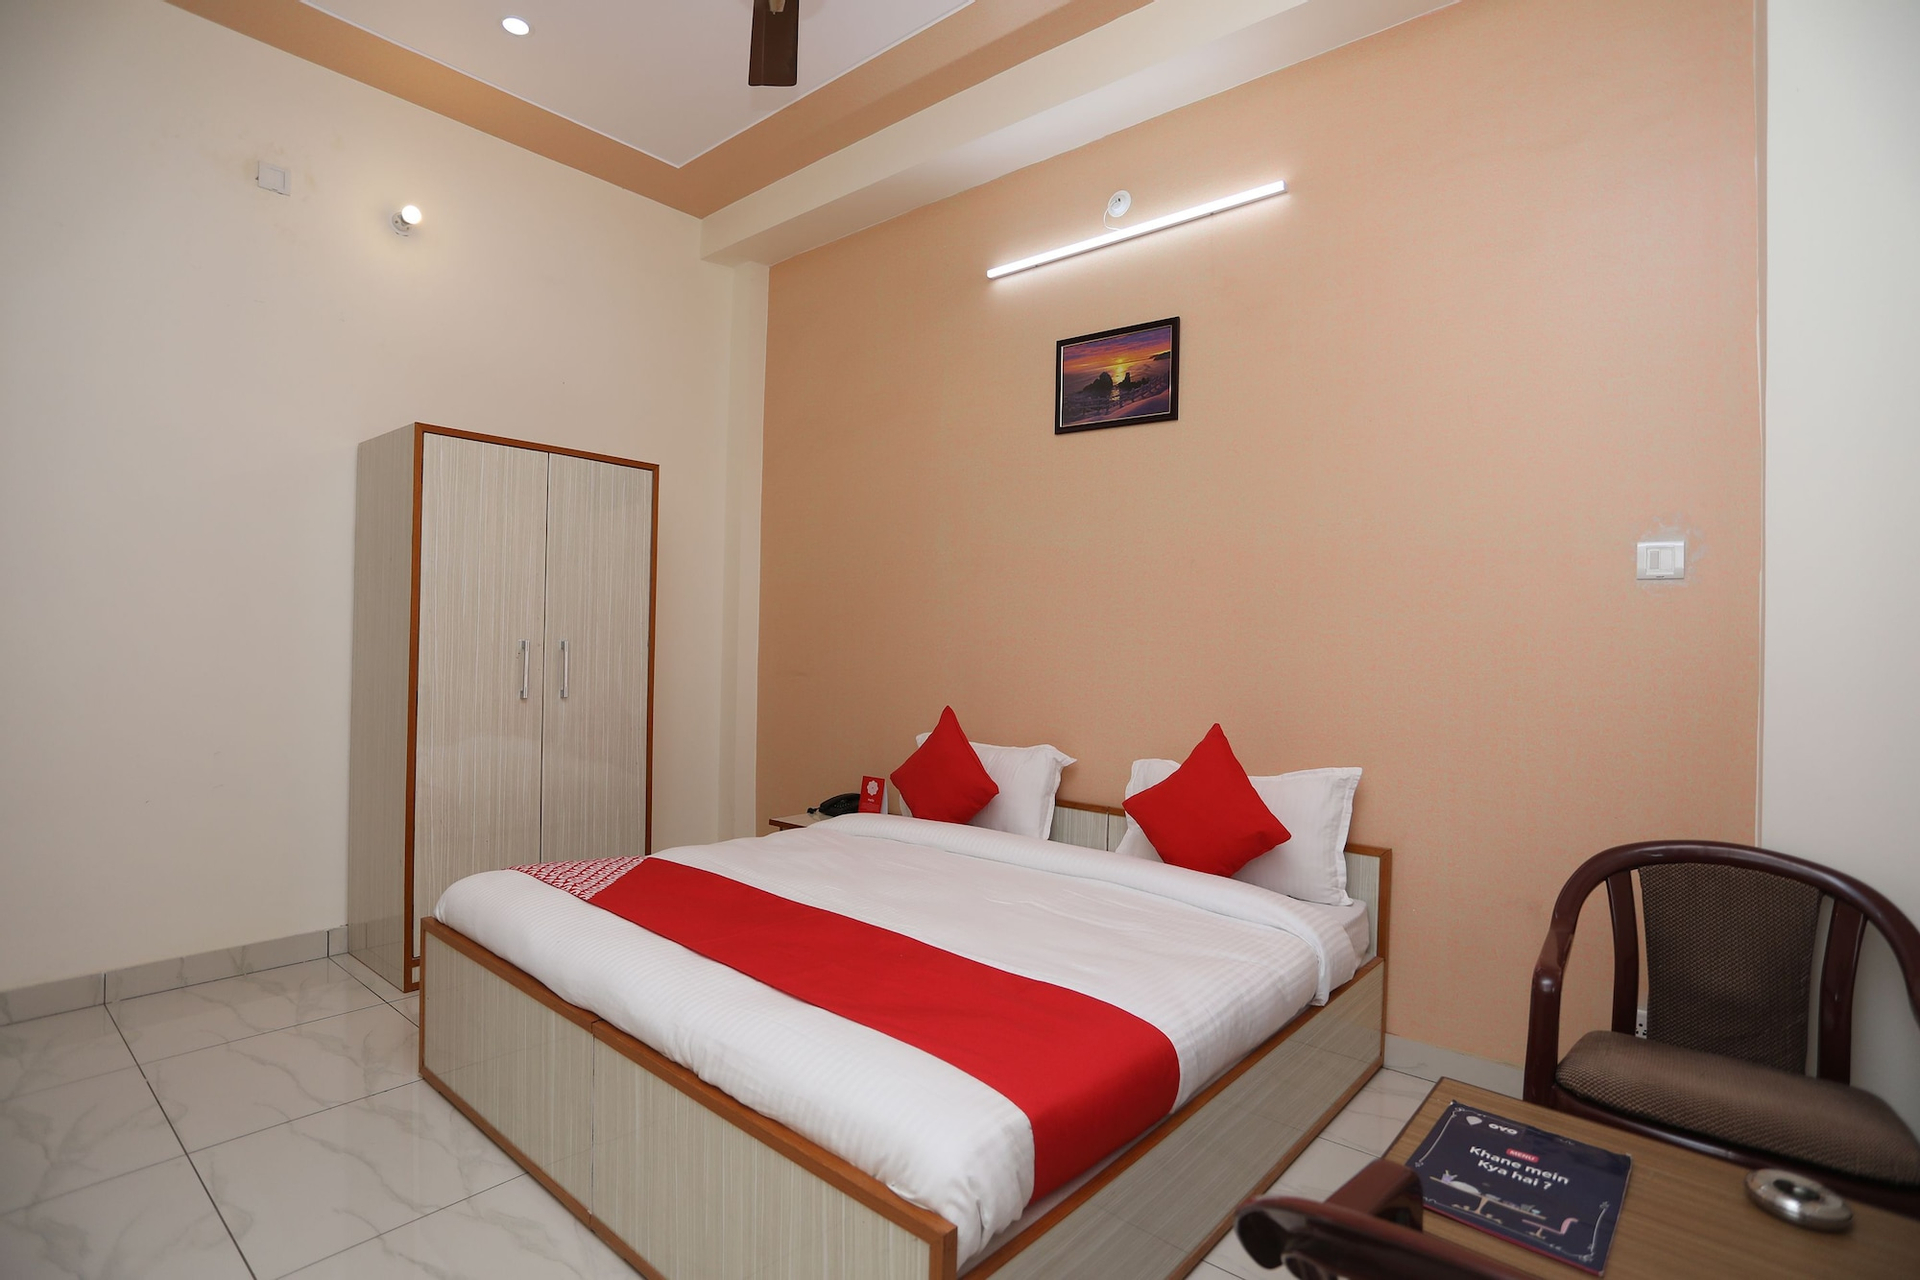 Room 4, OYO 17291 Shree Ram Palace, Rewari